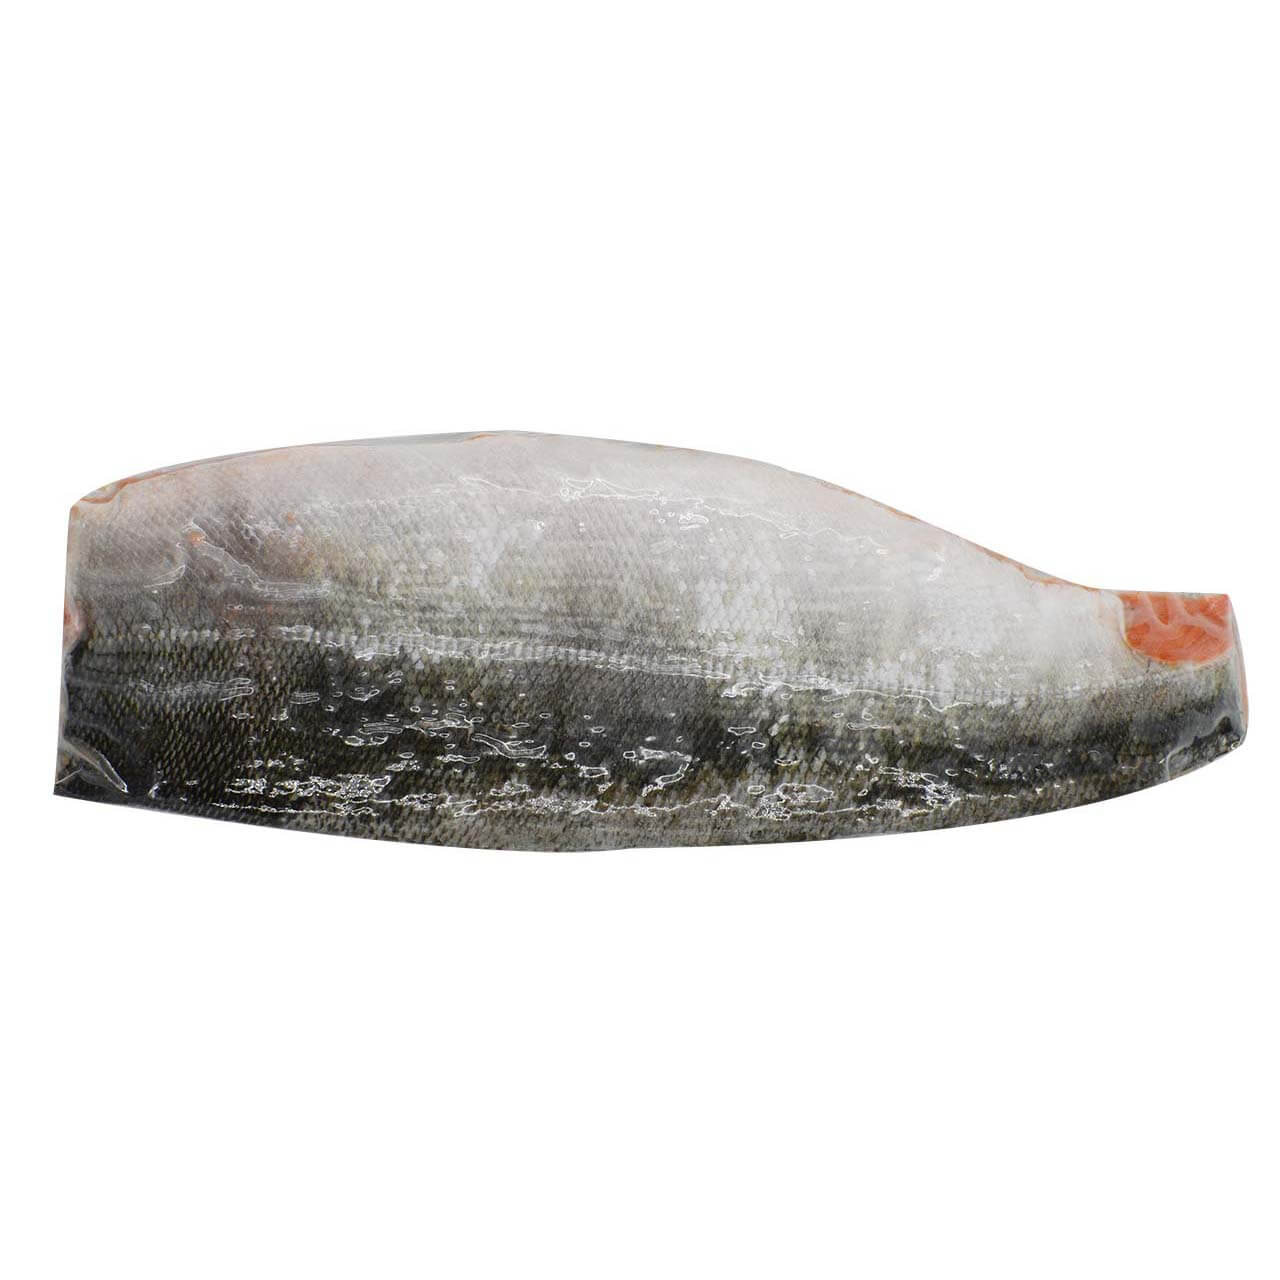 Large Wild Alaskan Sockeye Salmon Fillet